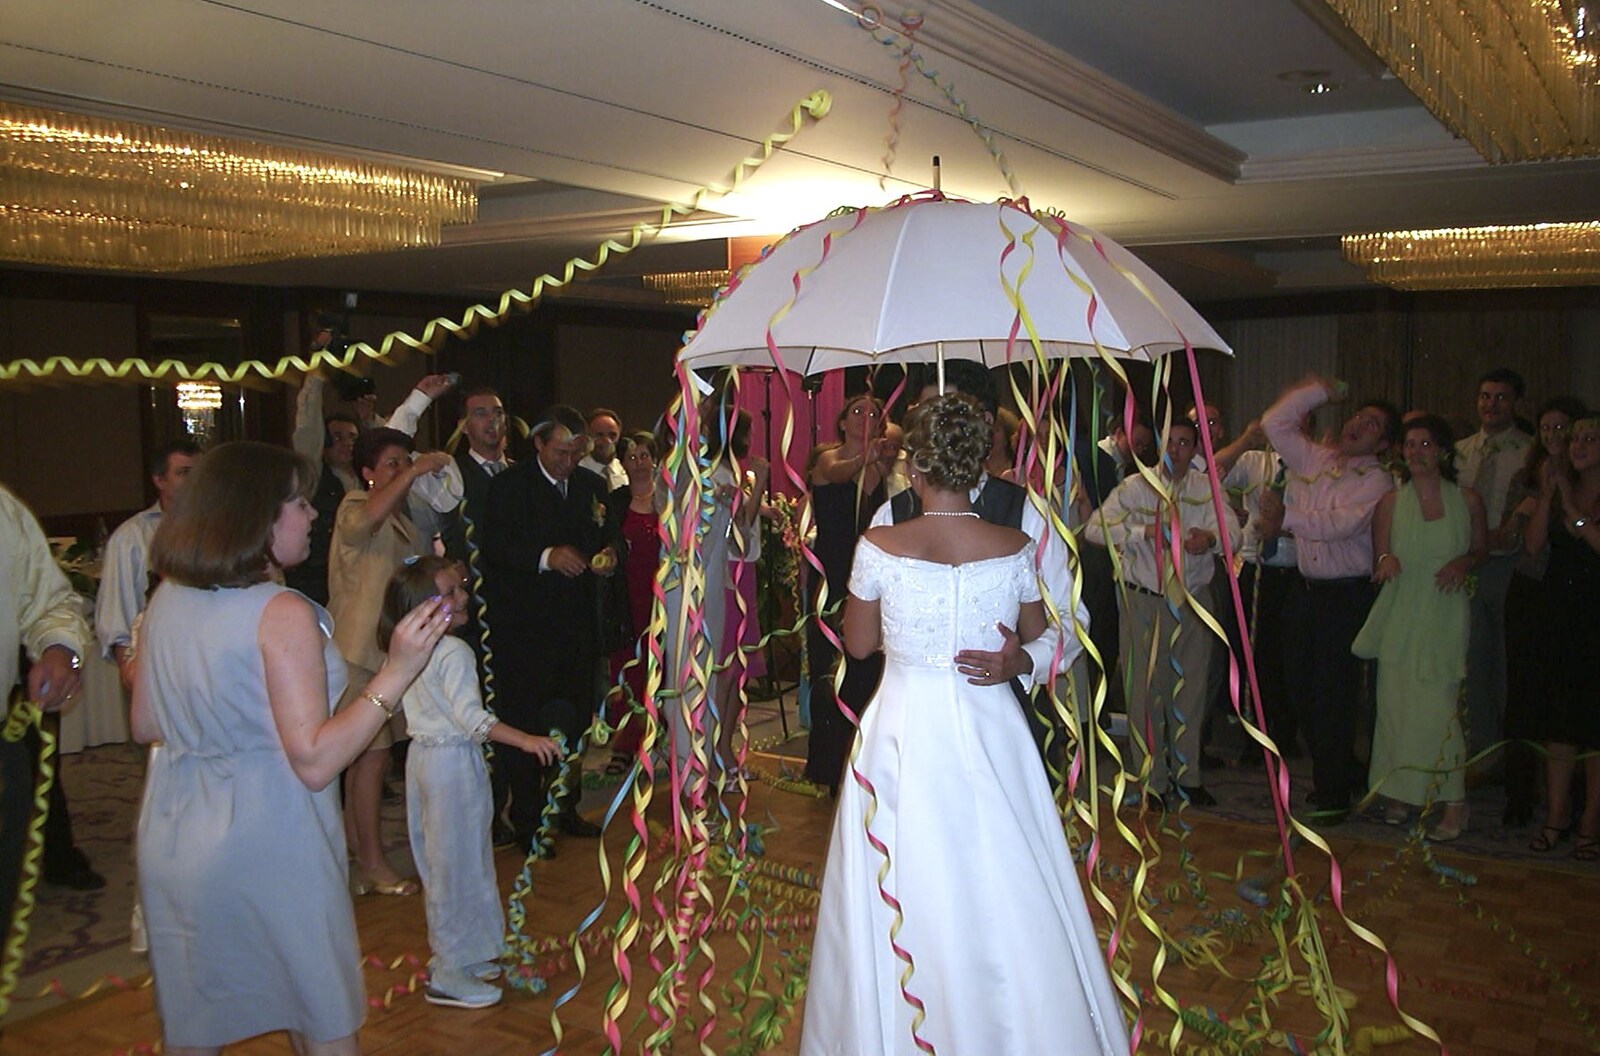 There's some umbrella dancing from Elisa and Luigi's Wedding, Carouge, Geneva, Switzerland - 20th July 2001